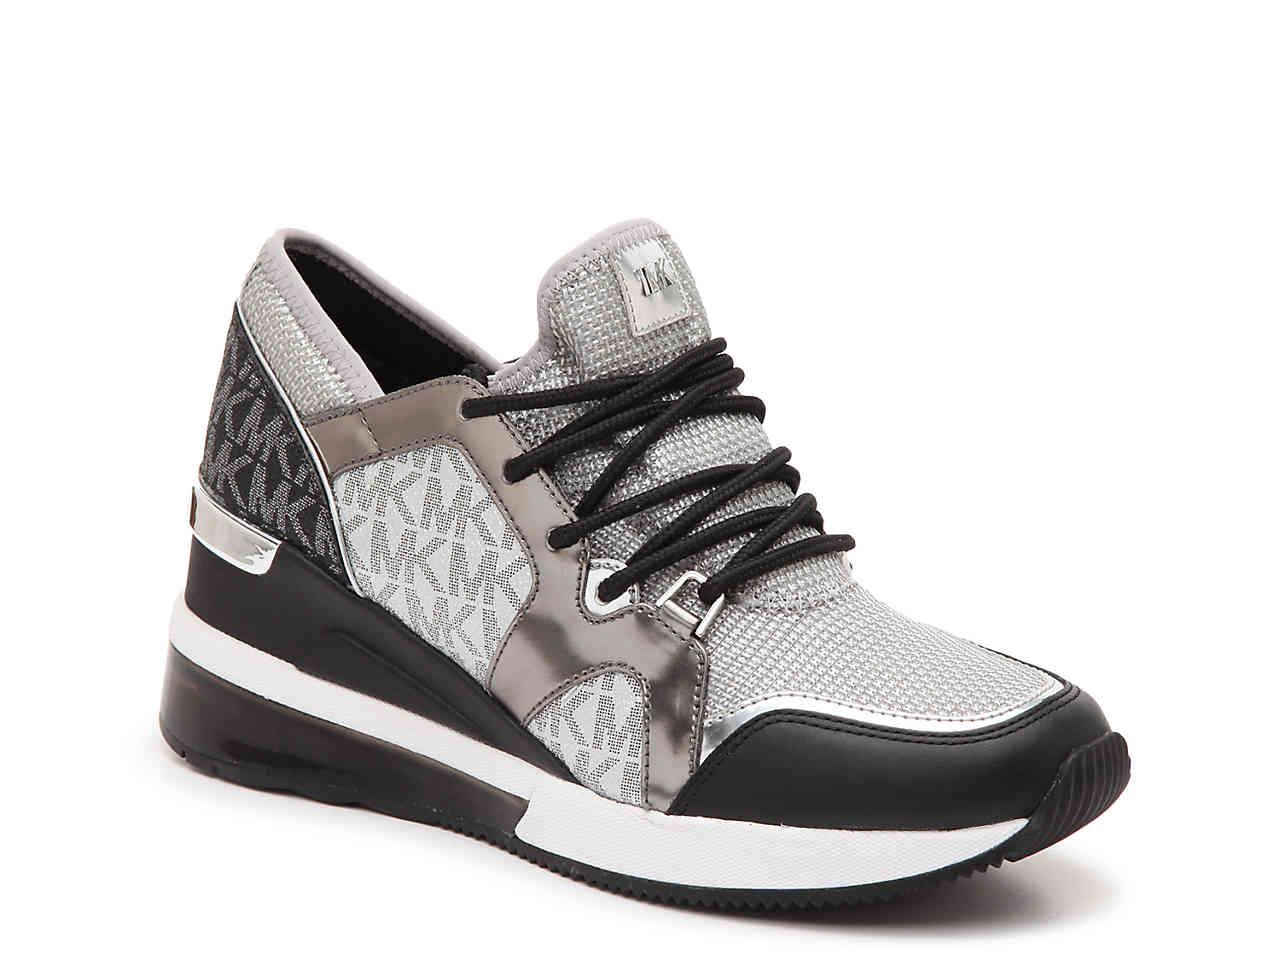 Michael Kors  Shoes  Nwt Michael Kors Liv Trainer Sneakers Size 8   Poshmark